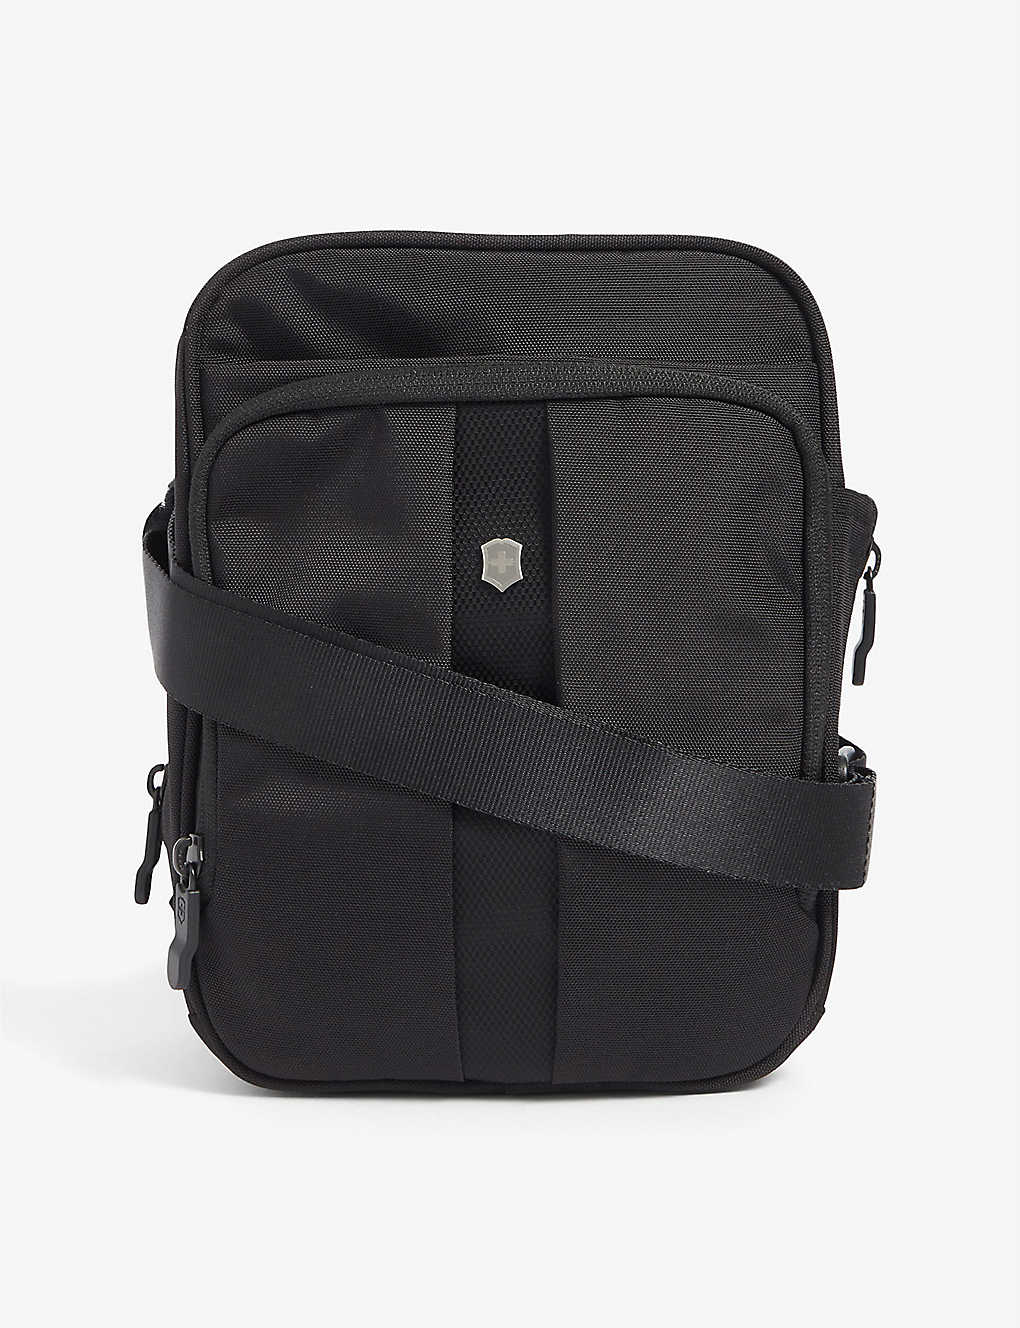 Victorinox 5.0 Travel Companion Shell Cross-body Bag In Black